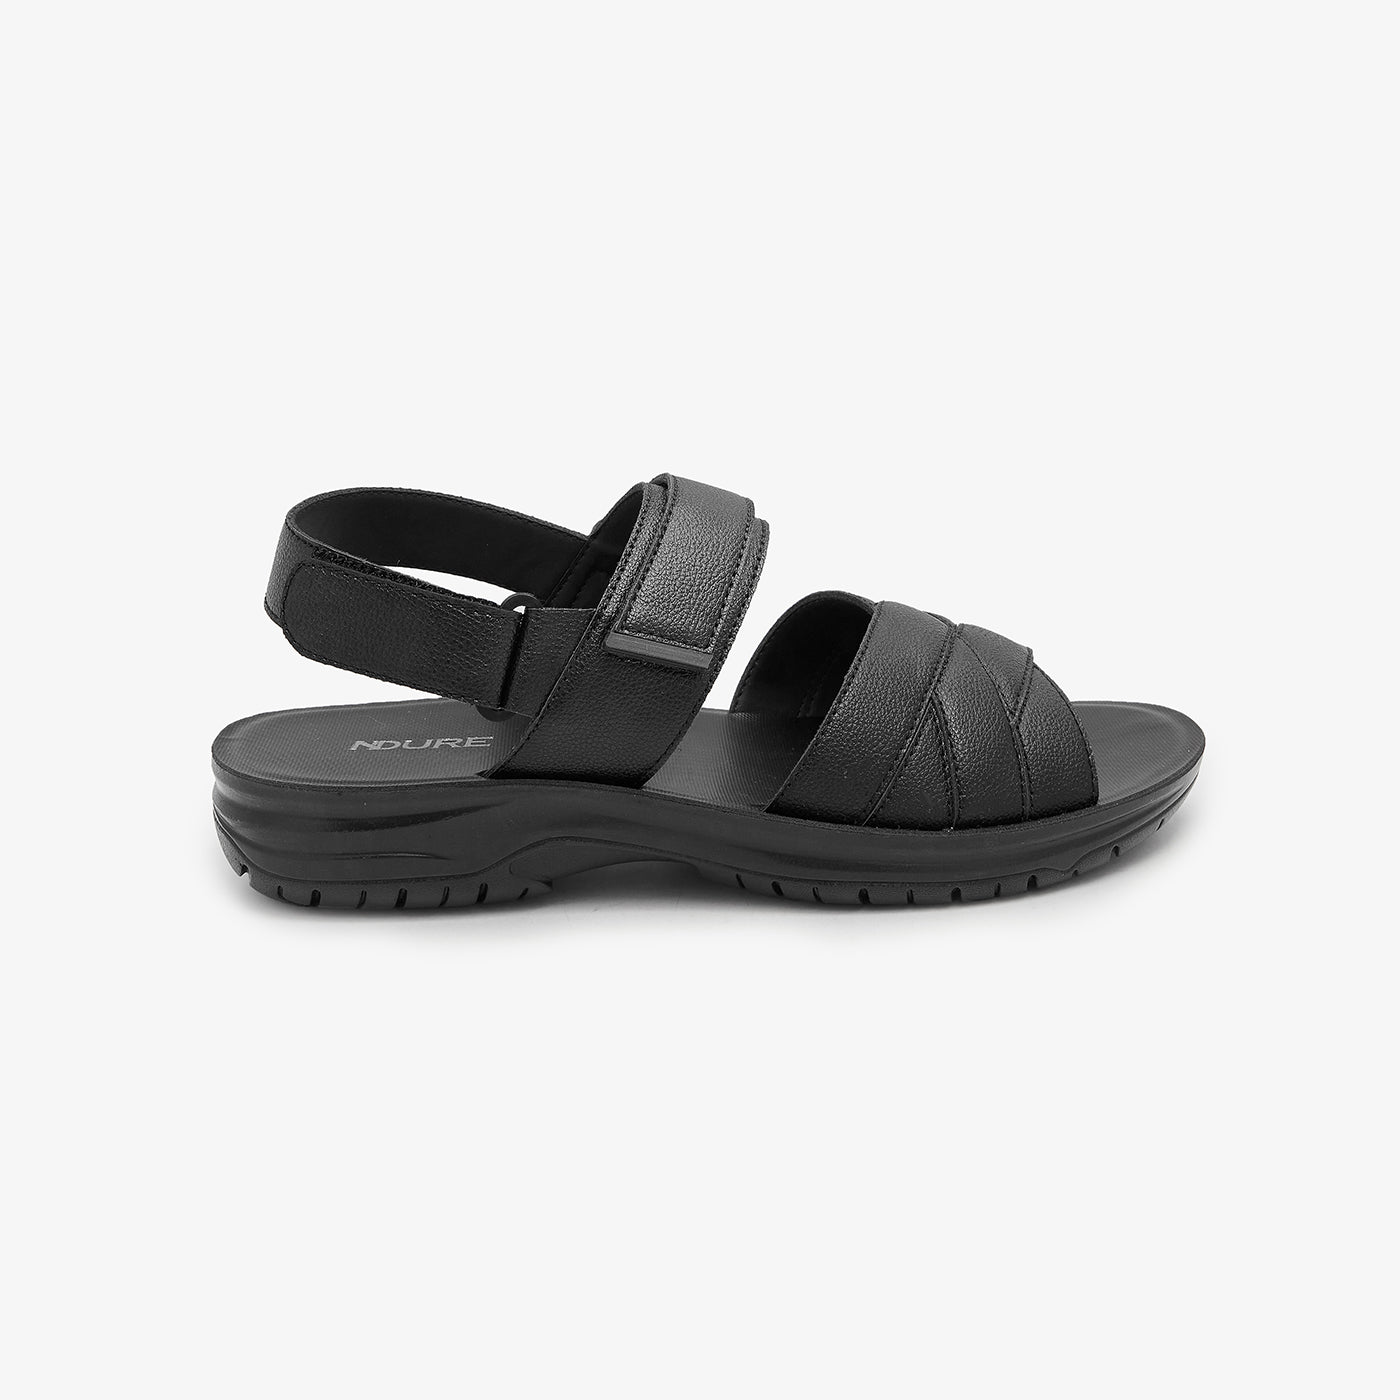 Best sandals for men